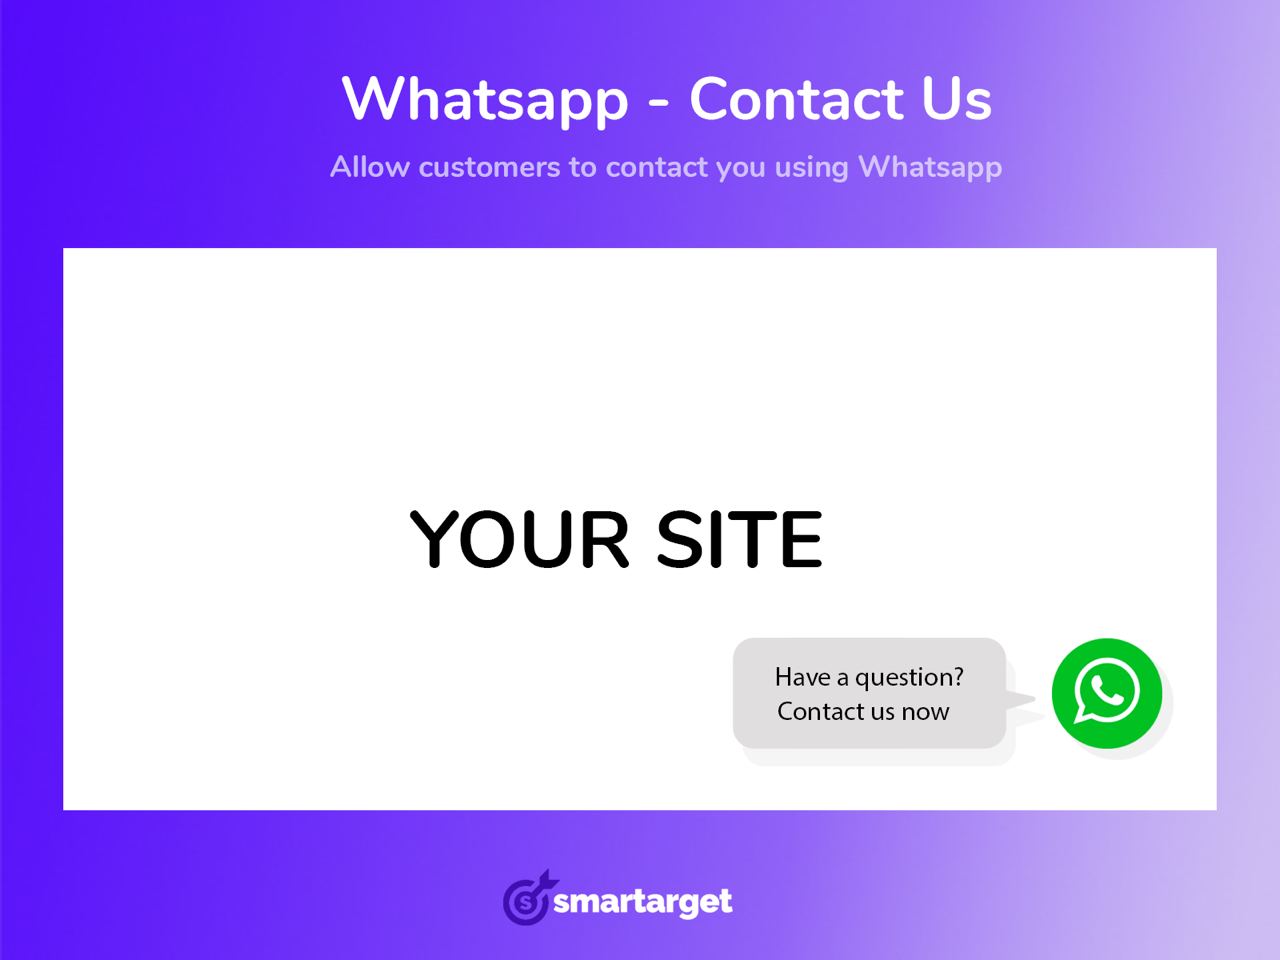 Smartarget WhatsApp - Contact Us Image